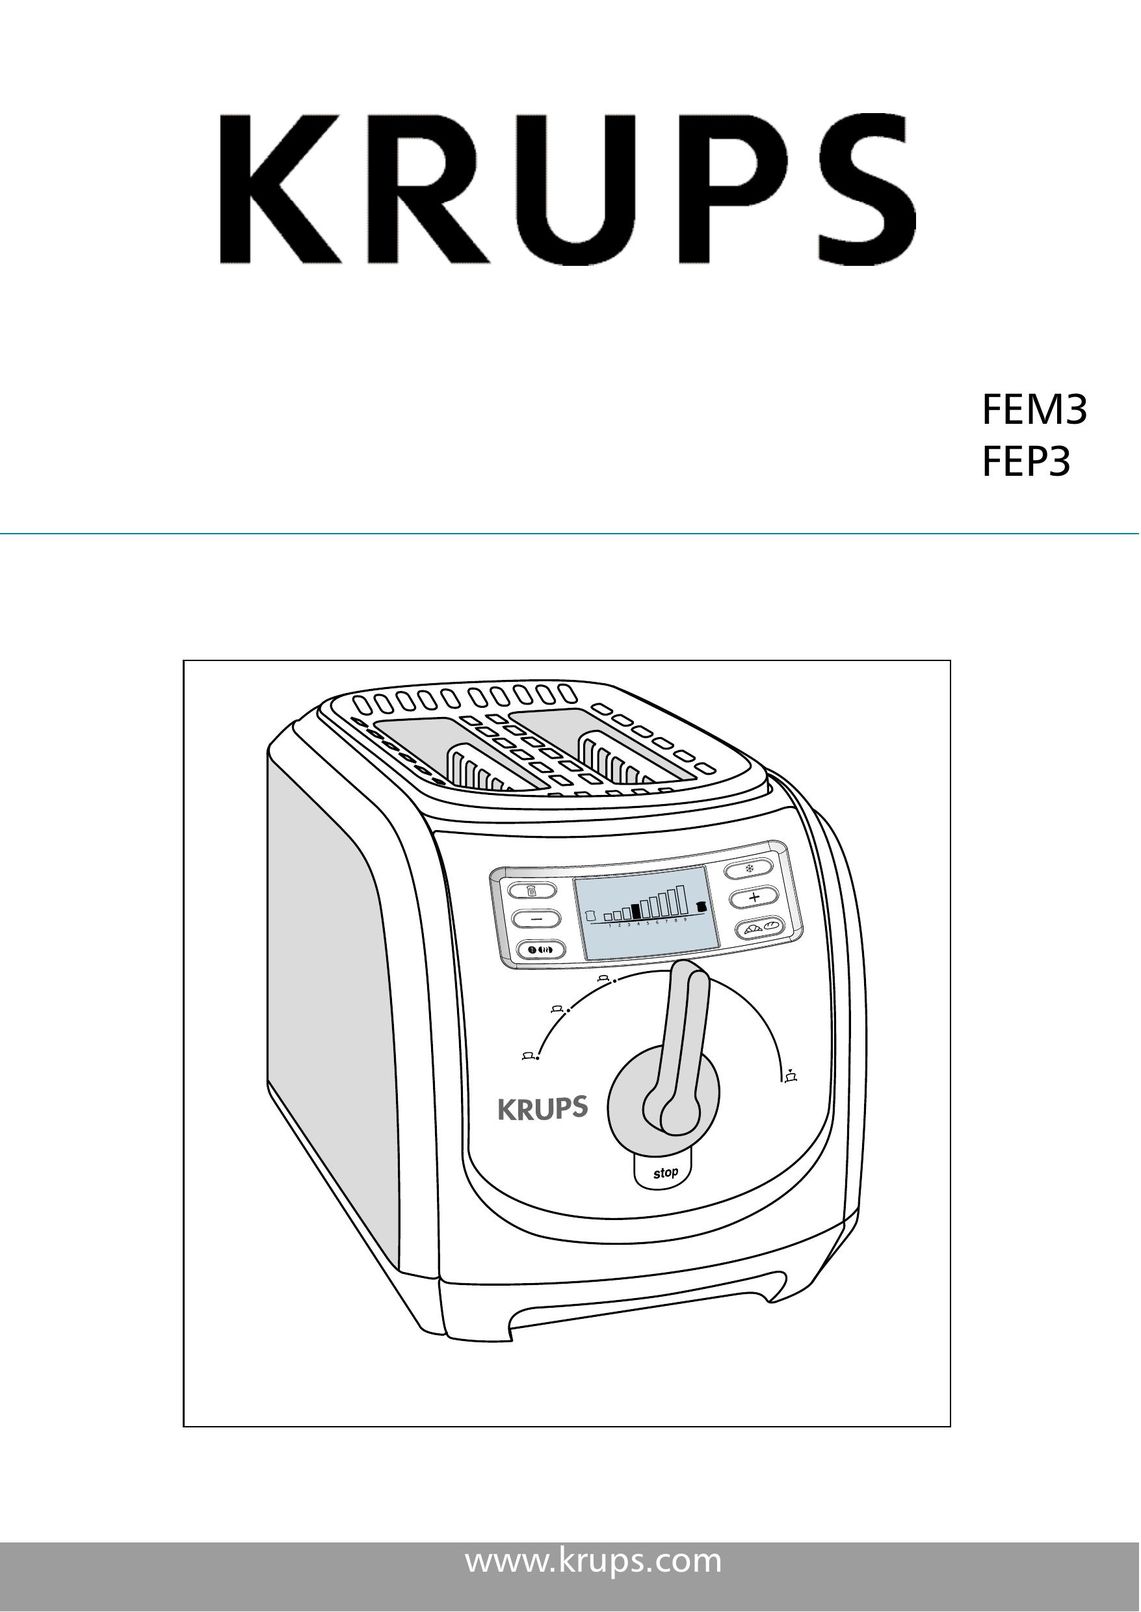 Krups FEM3 Convection Oven User Manual